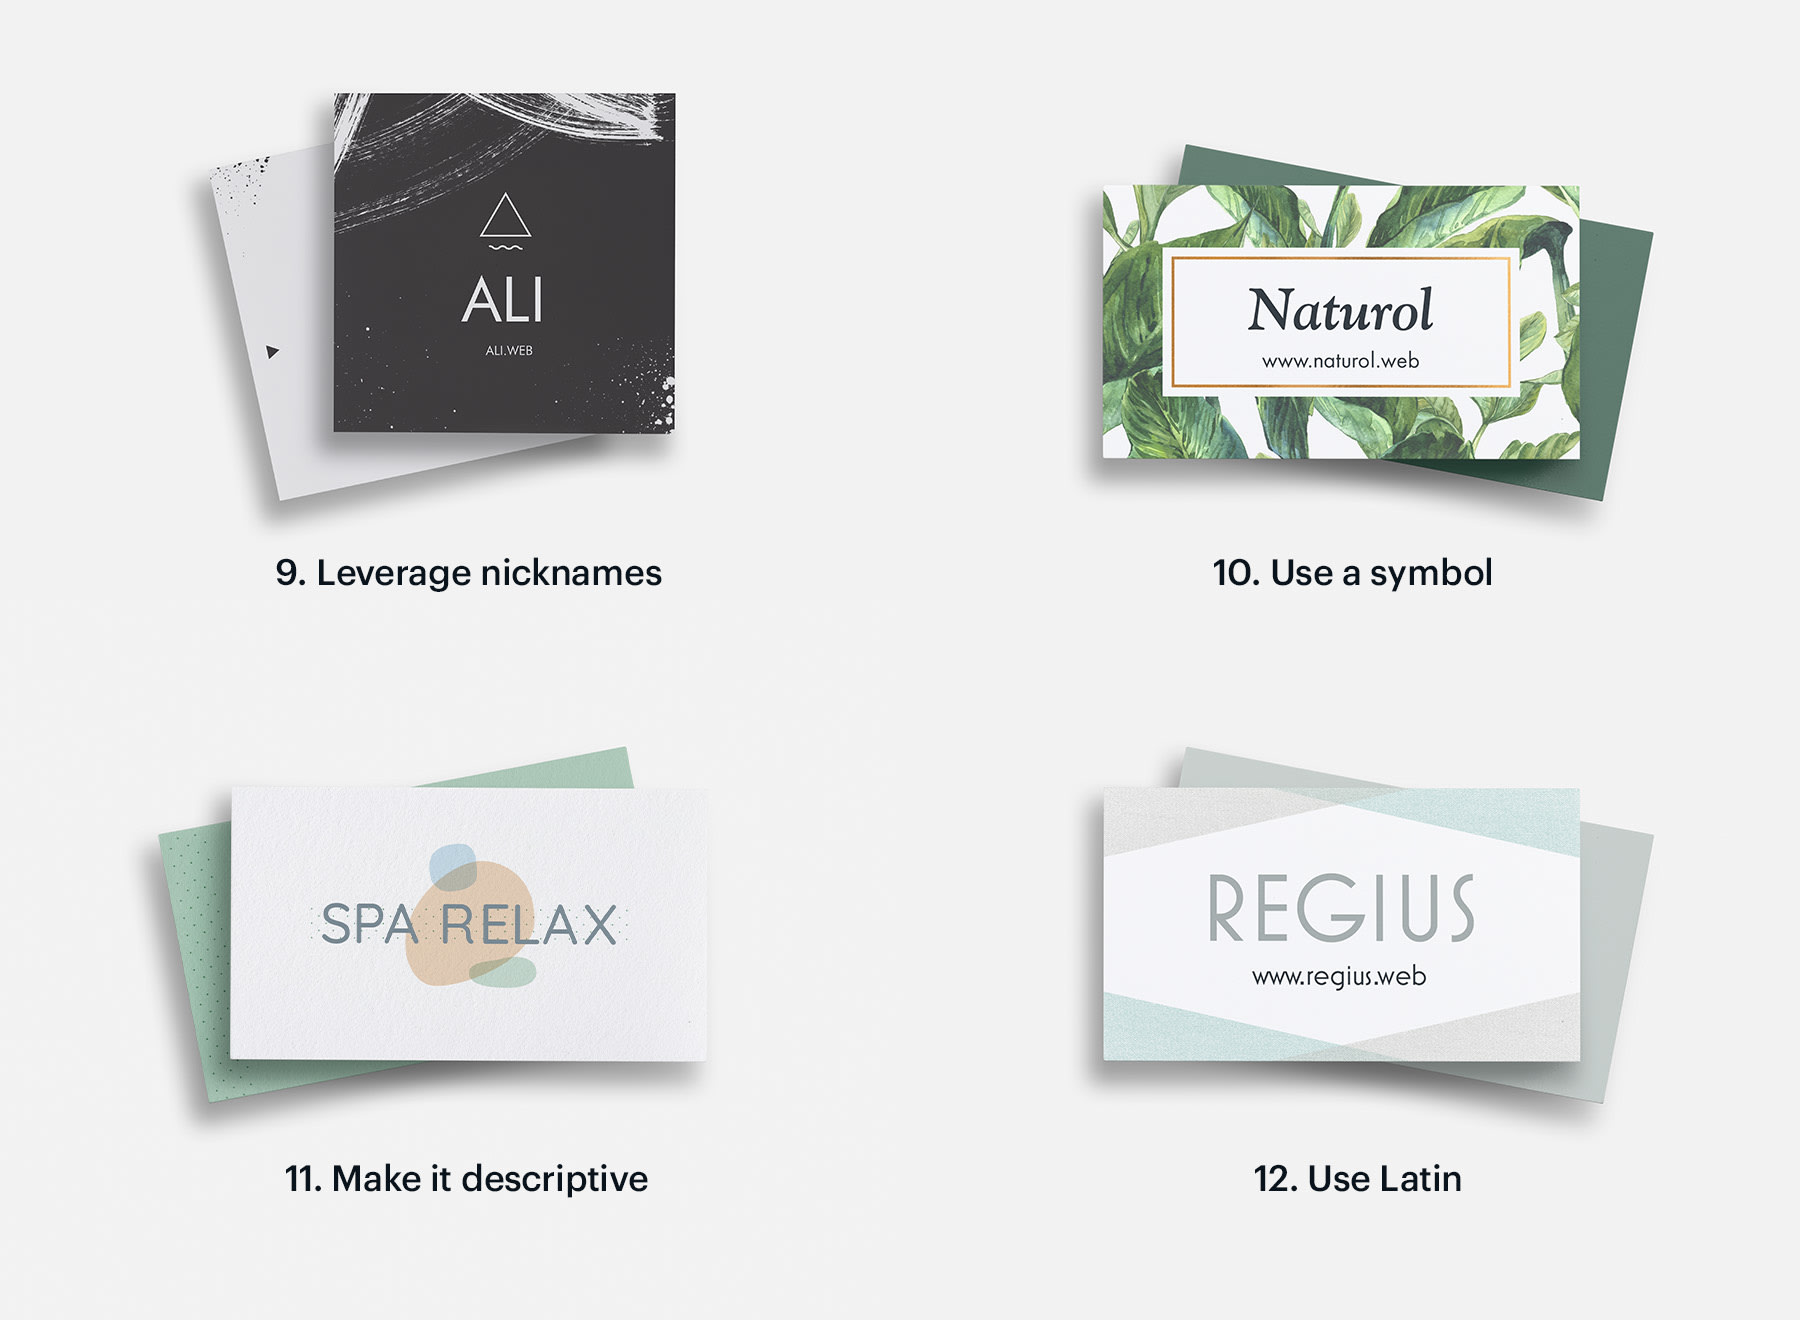 Image of business cards: 9. Leverage nicknames, 10. Use a symbol, 11. Make it descriptive, 12. Use Latin